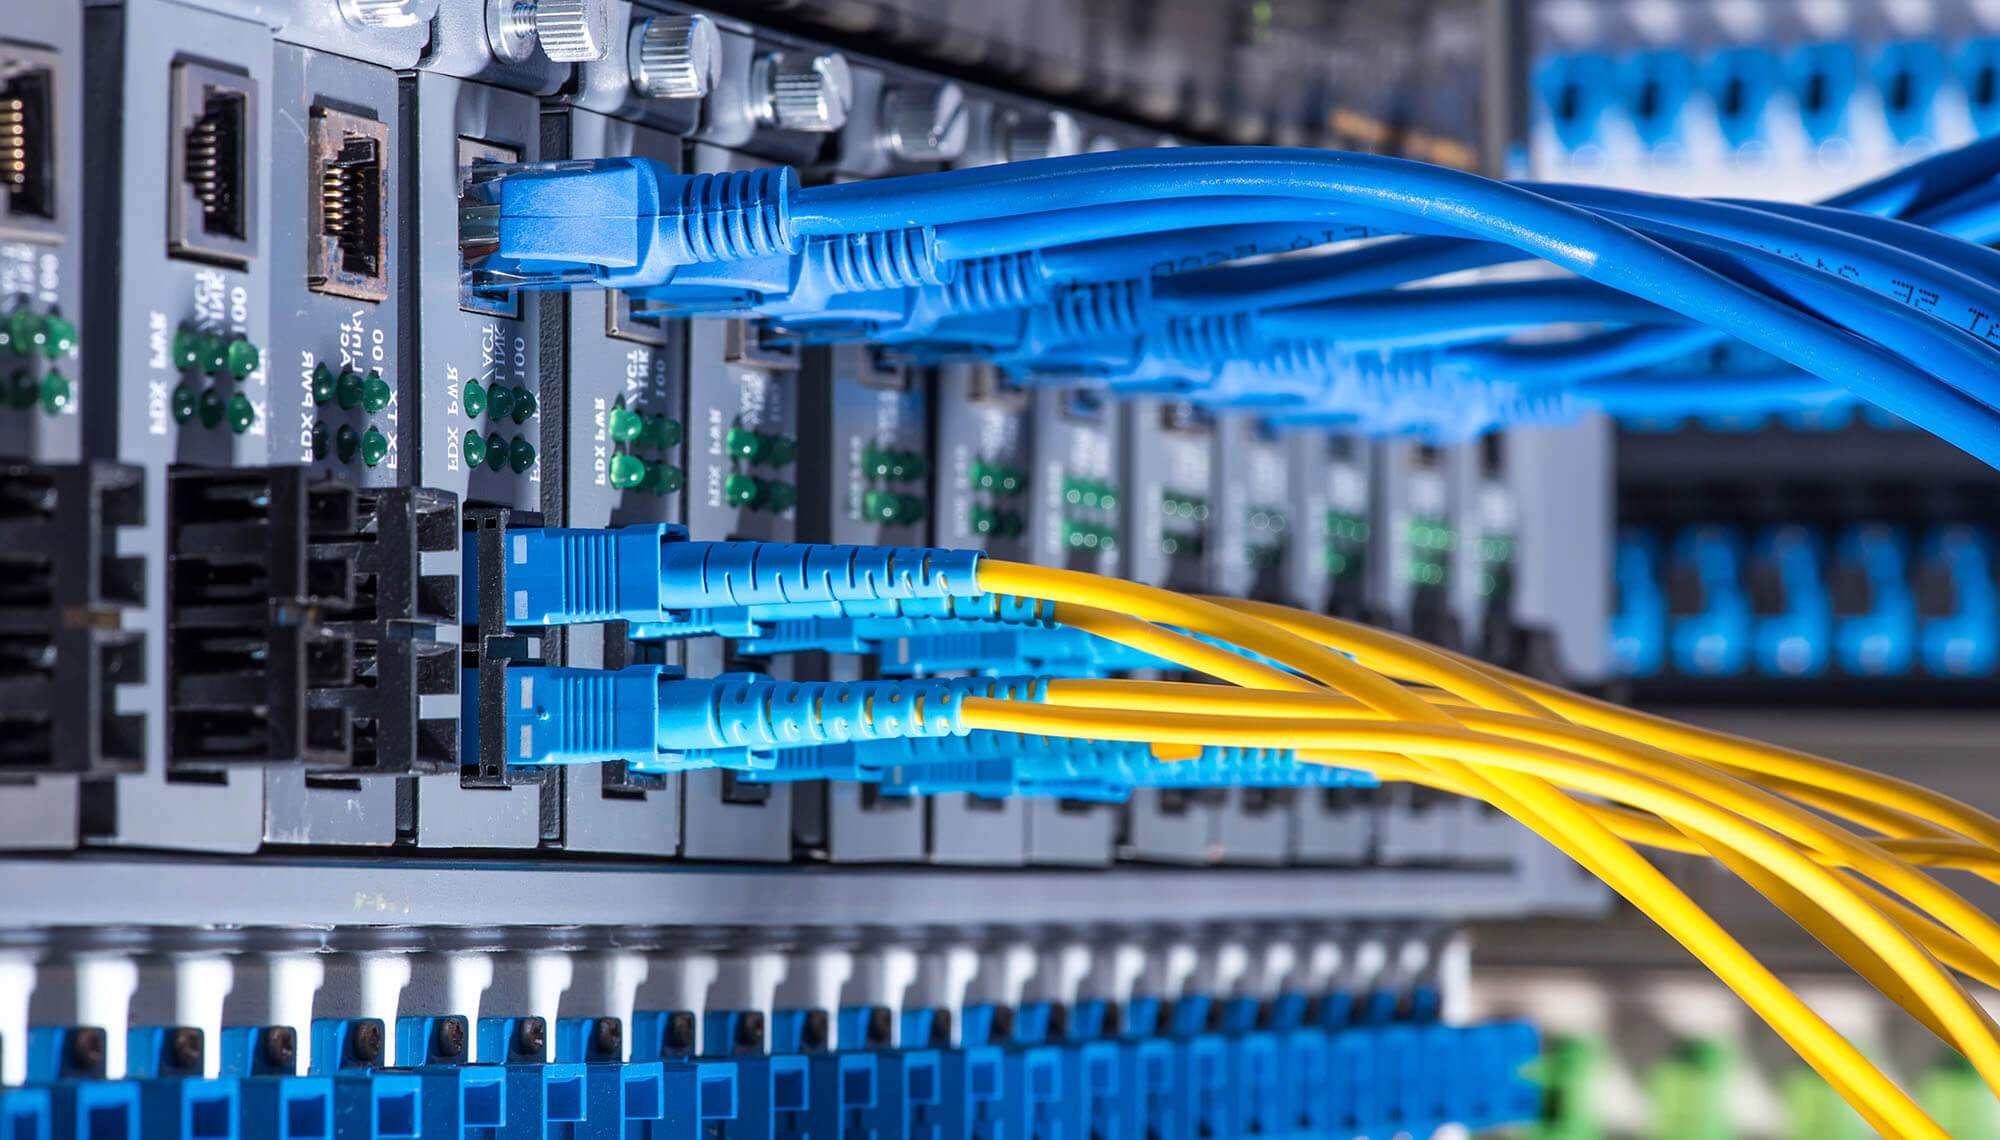 Cavi di rete blu e gialli collegati all'interfaccia di un server